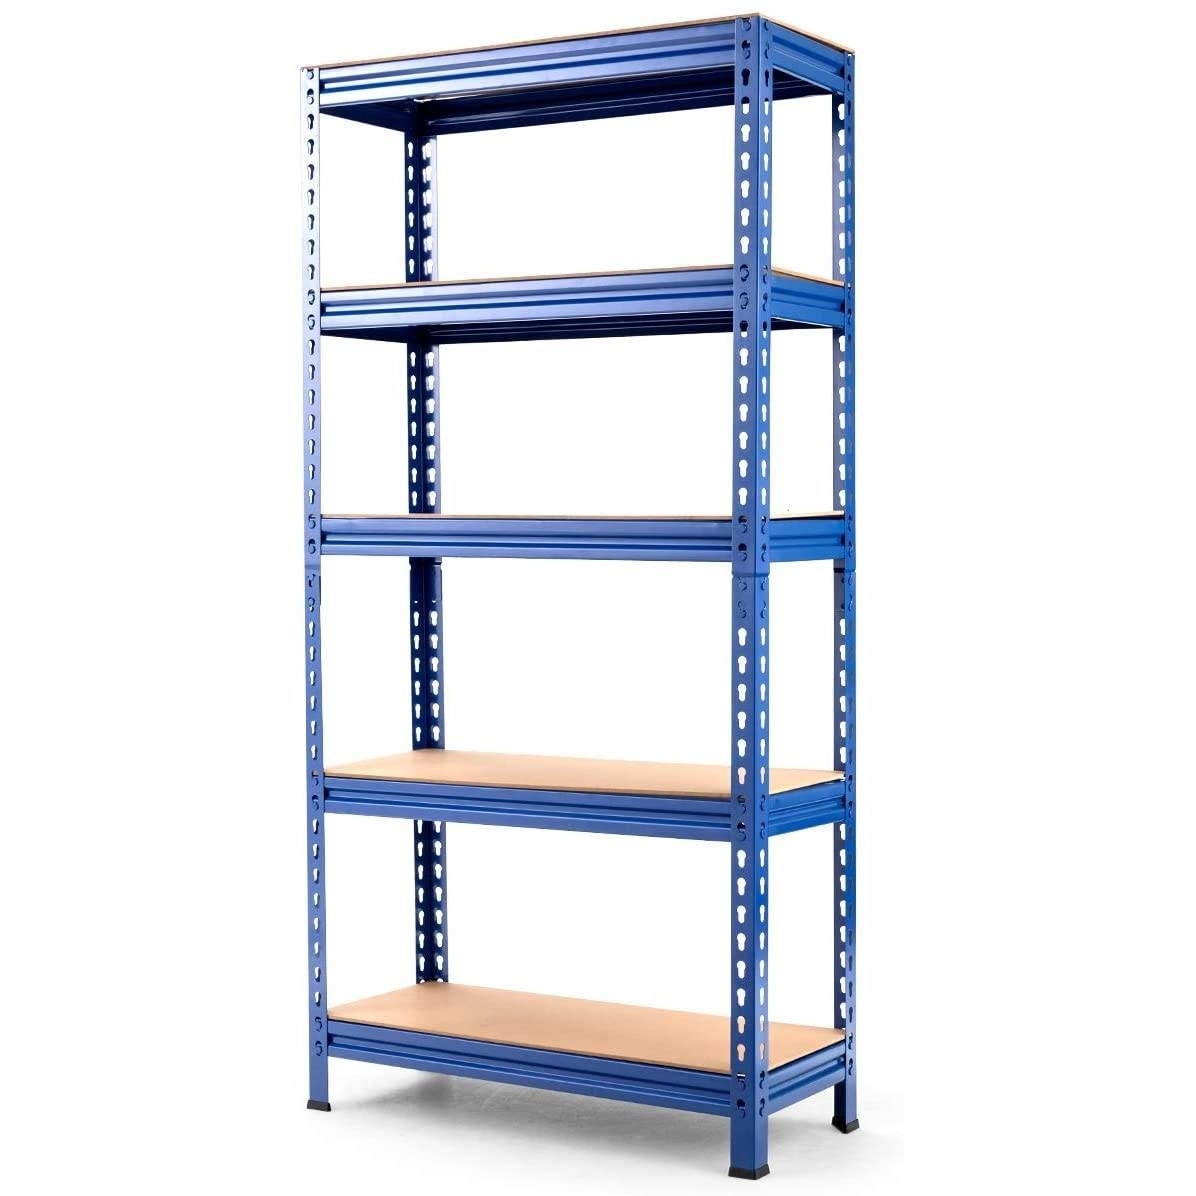 Simple Deluxe Heavy Duty 3-Shelf Shelving with Wheels, Adjustable Storage Units, Steel Organizer Wire Rack, Black